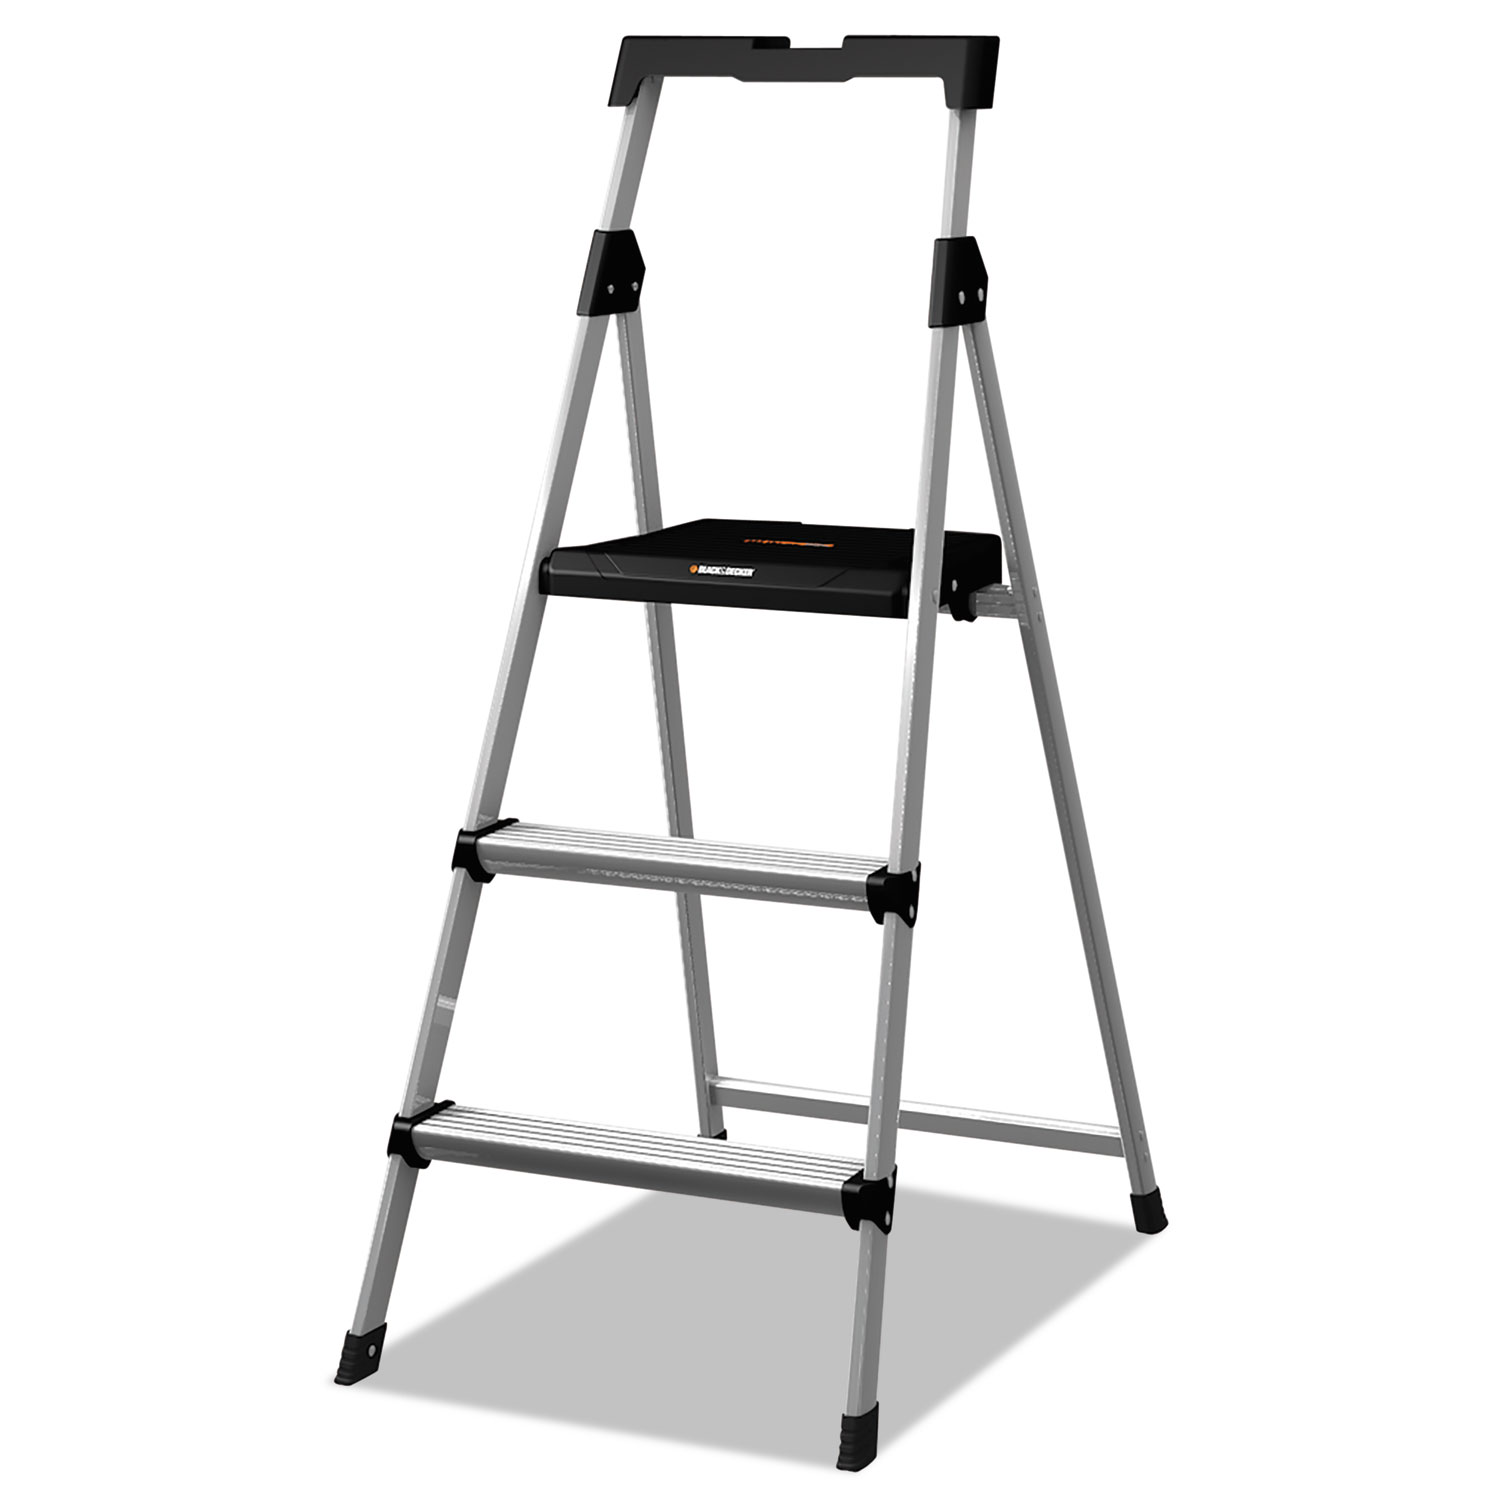  Louisville BXL2260-03S Aluminum Step Stool Ladder, 3-Step, 225 lb Capacity, 20w x 31 spread x 47h, Silver (DADBXL226003S) 